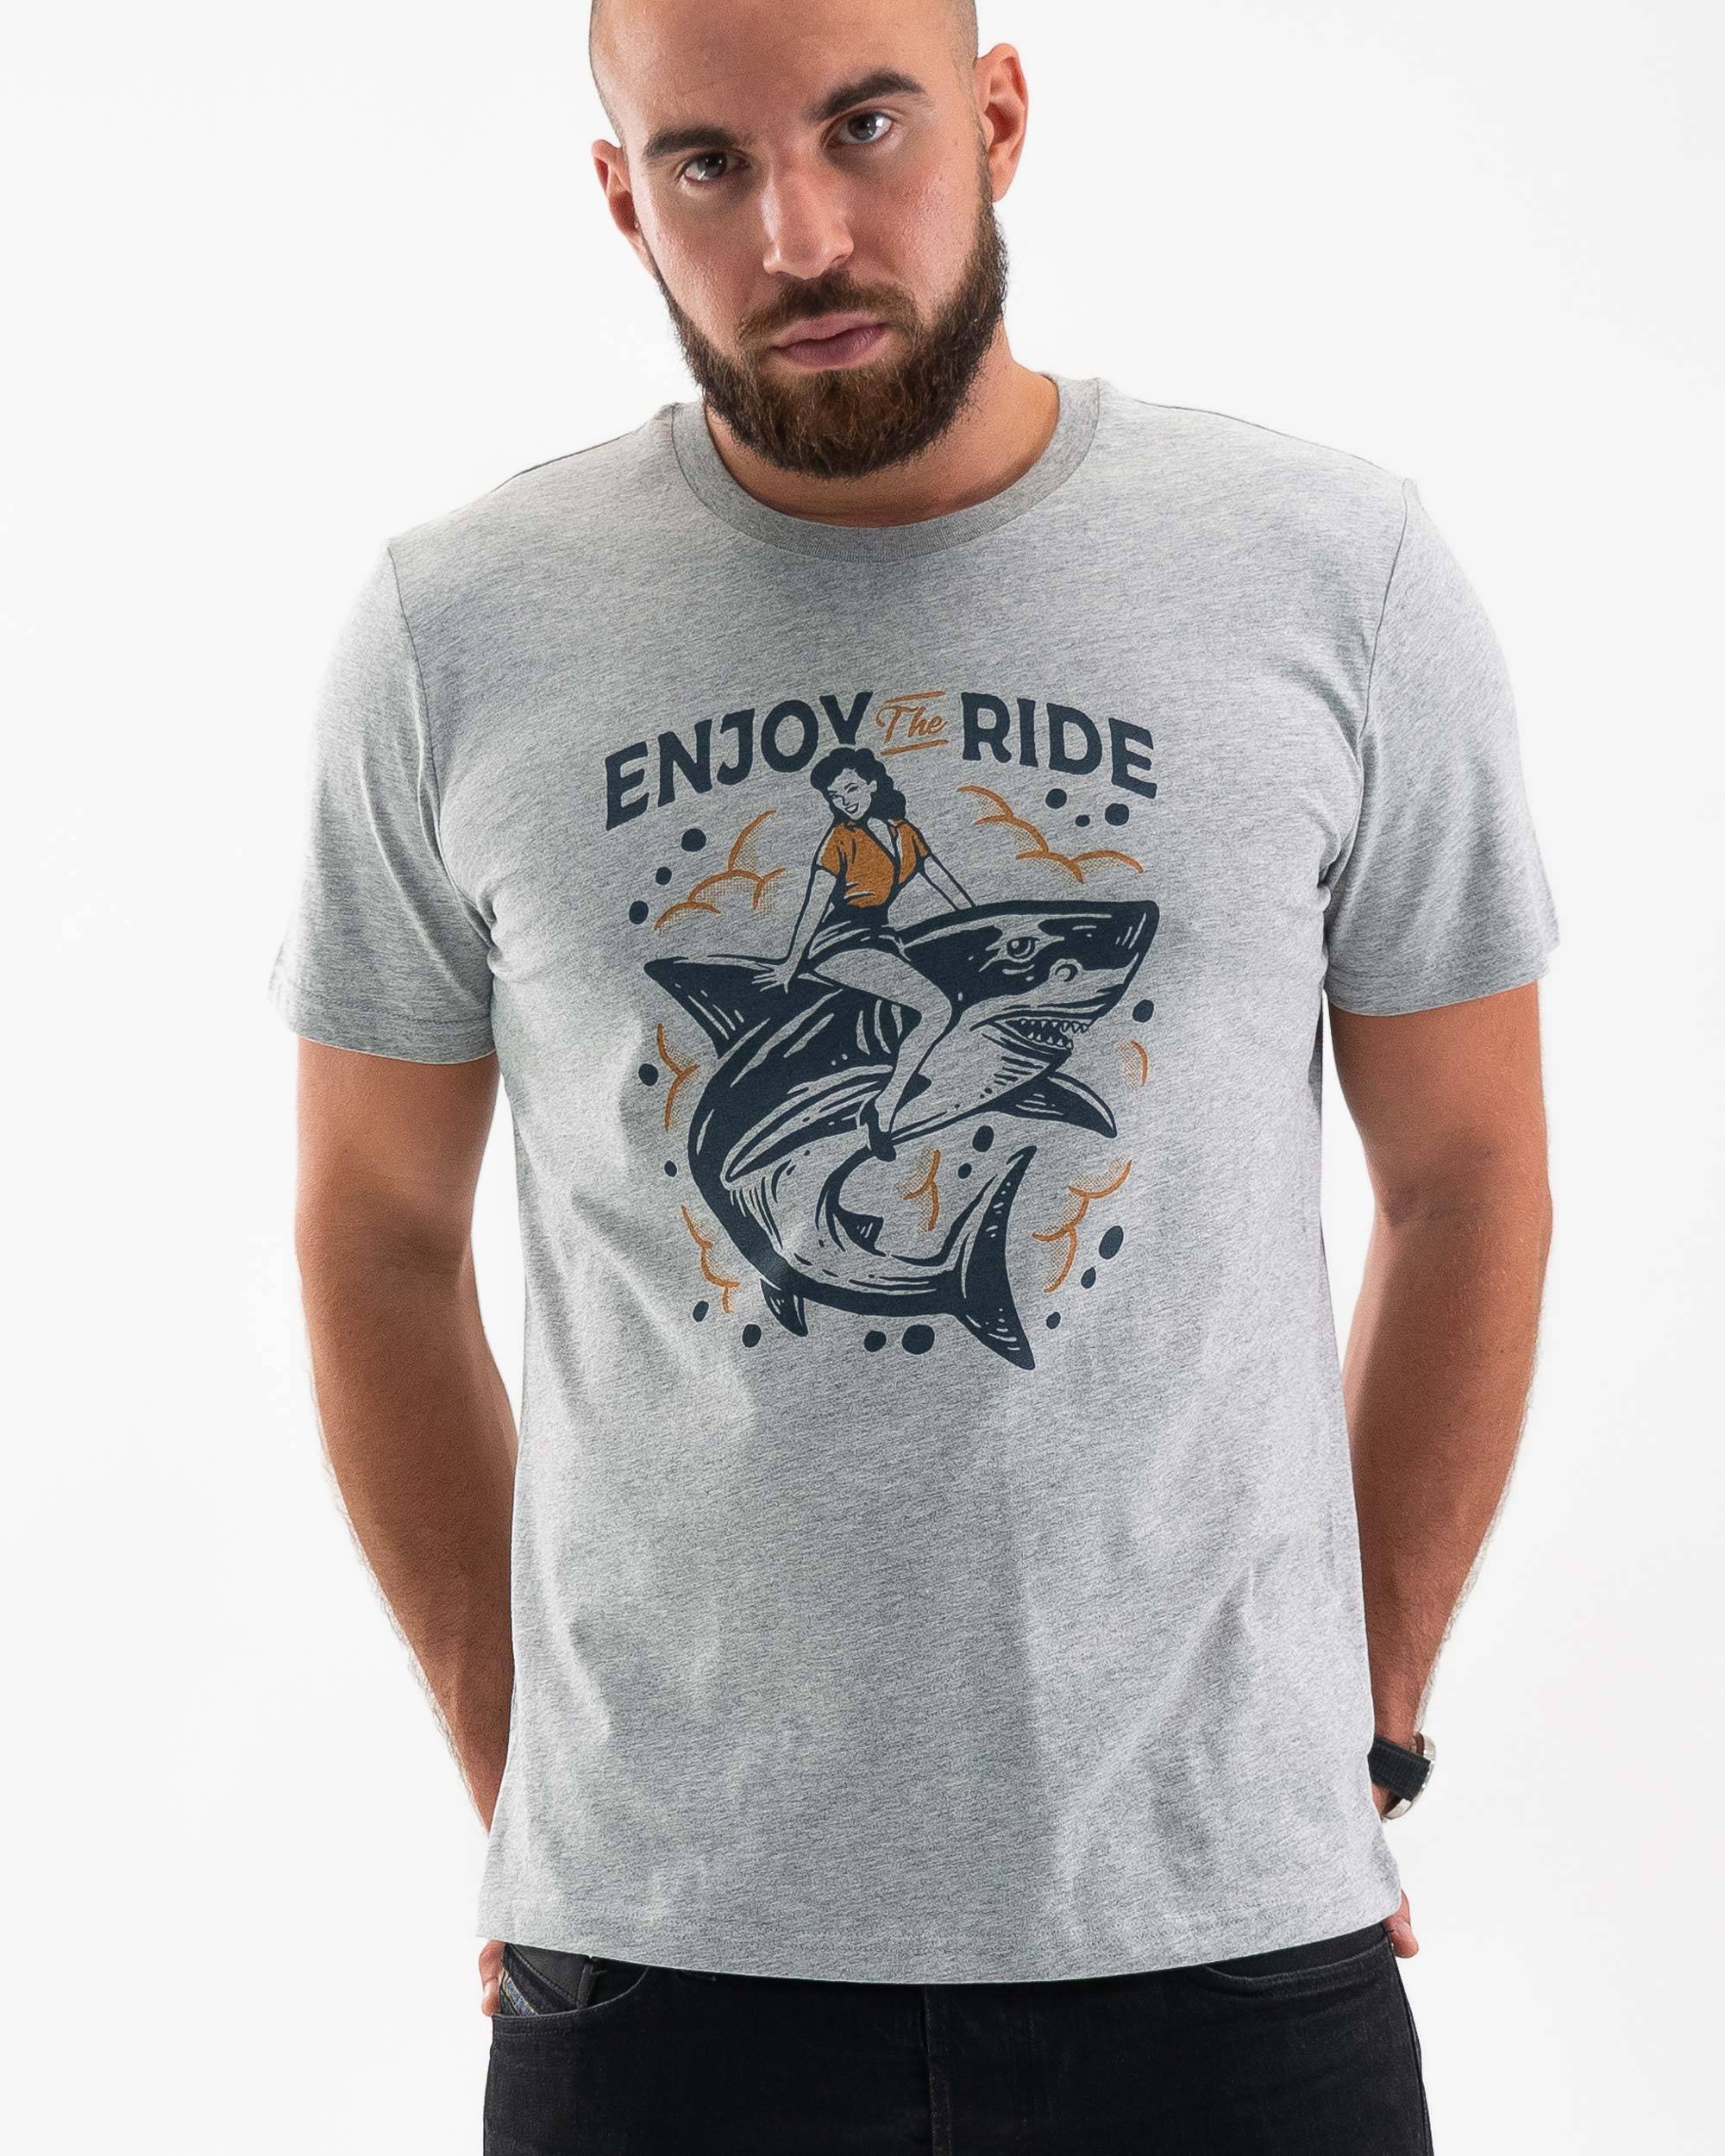 T-shirt Enjoy The Ride Grafitee